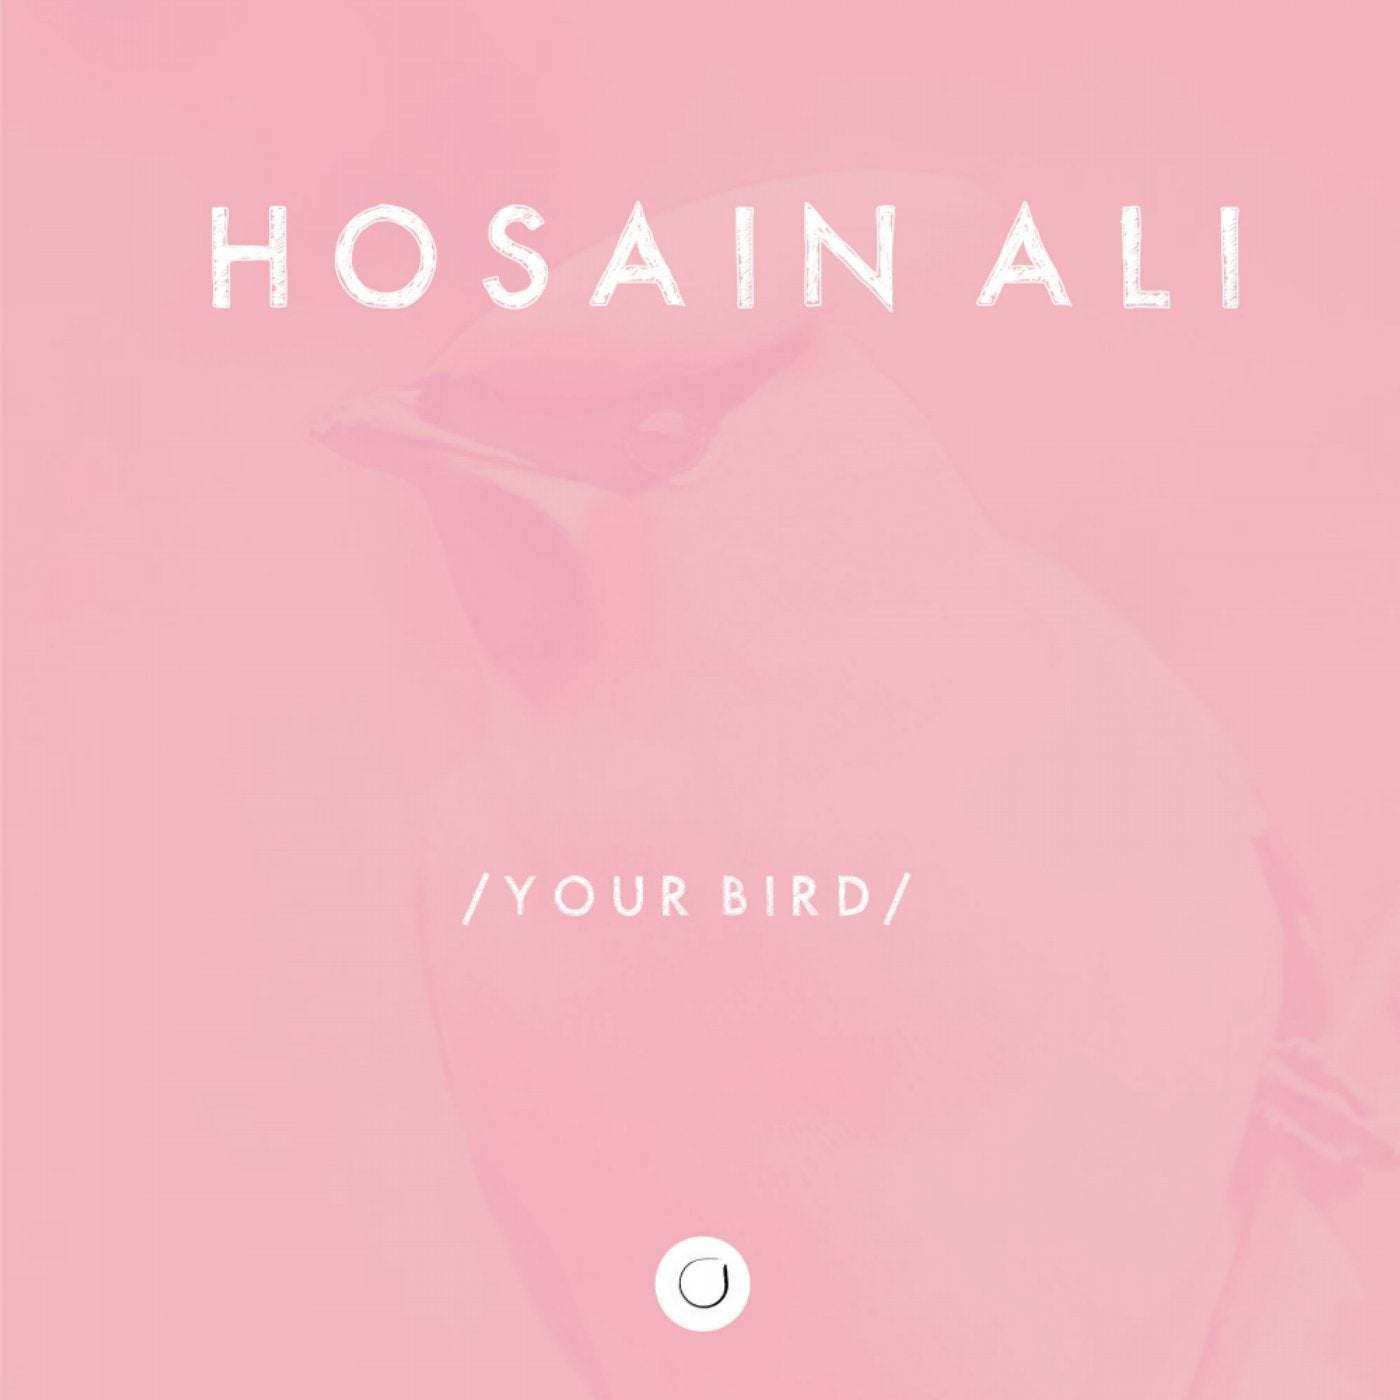 Your Bird